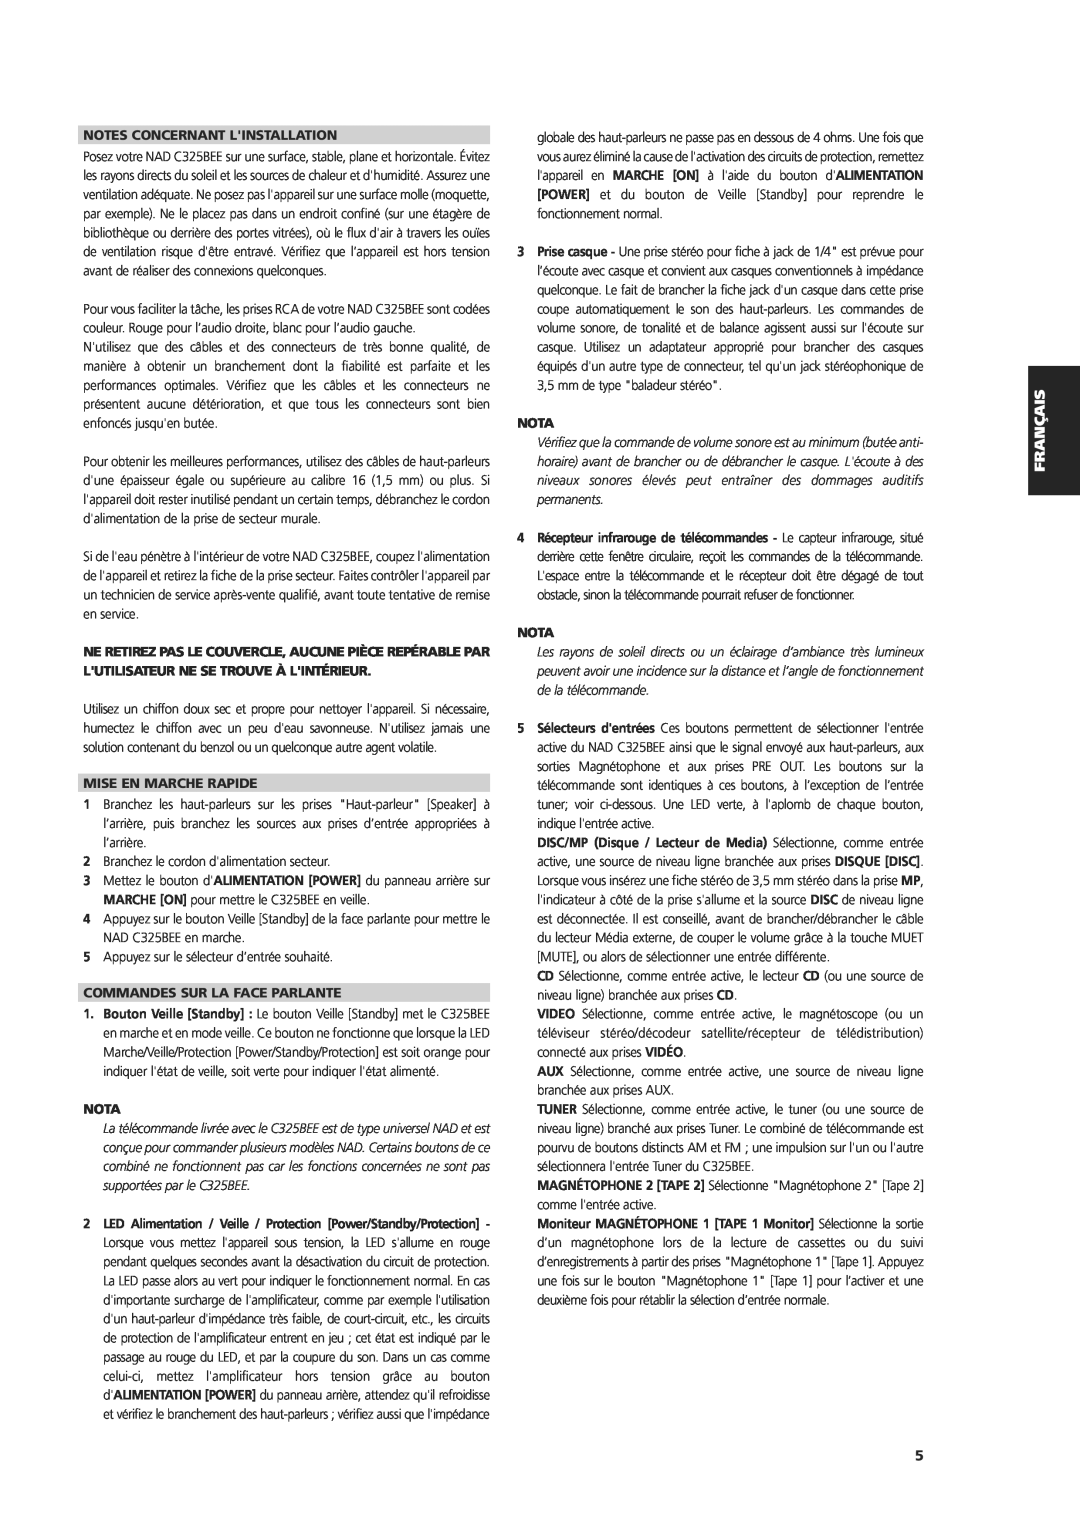 NAD C 325BEE owner manual Notes Concernant Linstallation, Mise En Marche Rapide, Commandes Sur La Face Parlante, Nota 